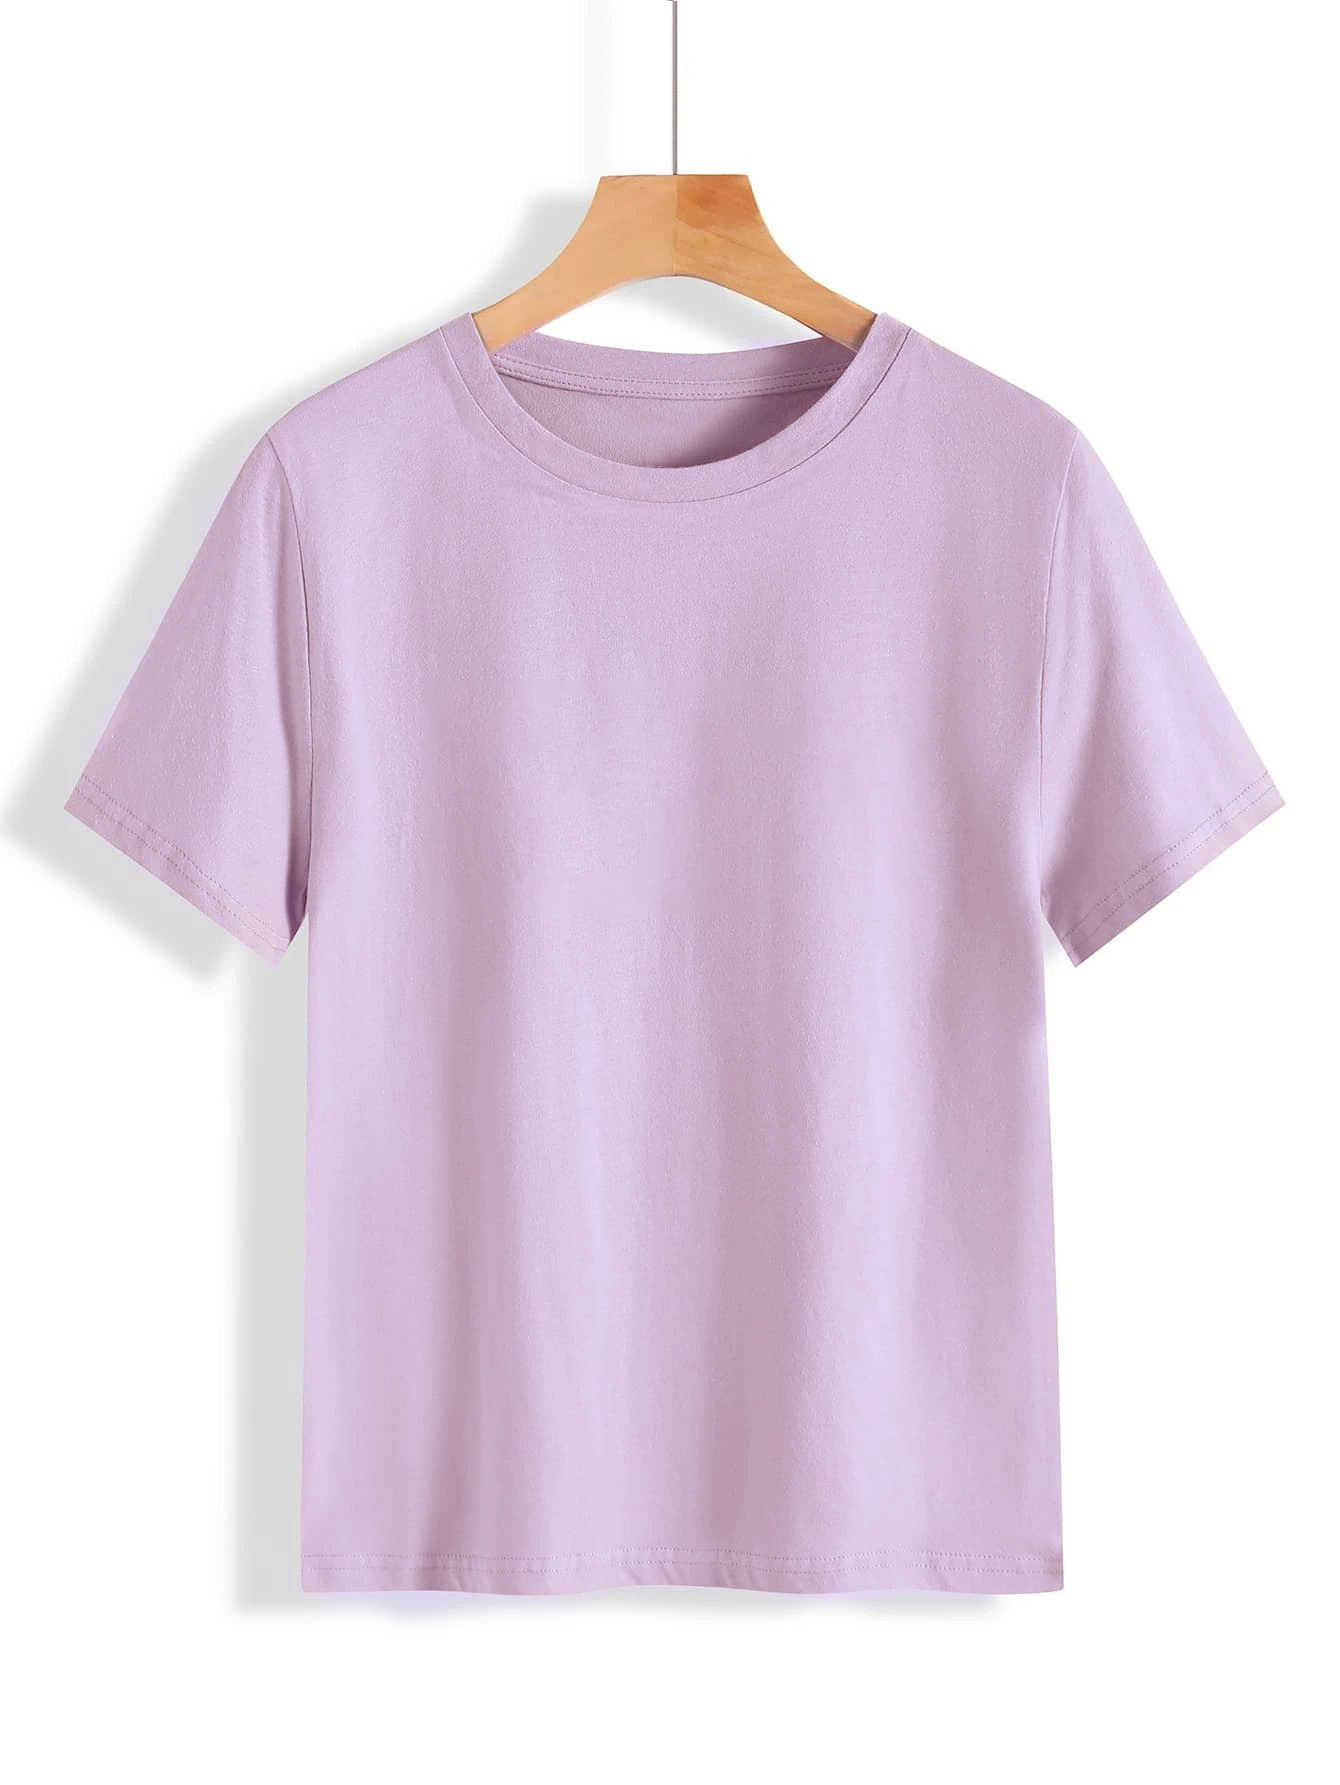 Women's T-shirt Short Sleeve T-shirts Printing Fashion Cartoon display picture 3